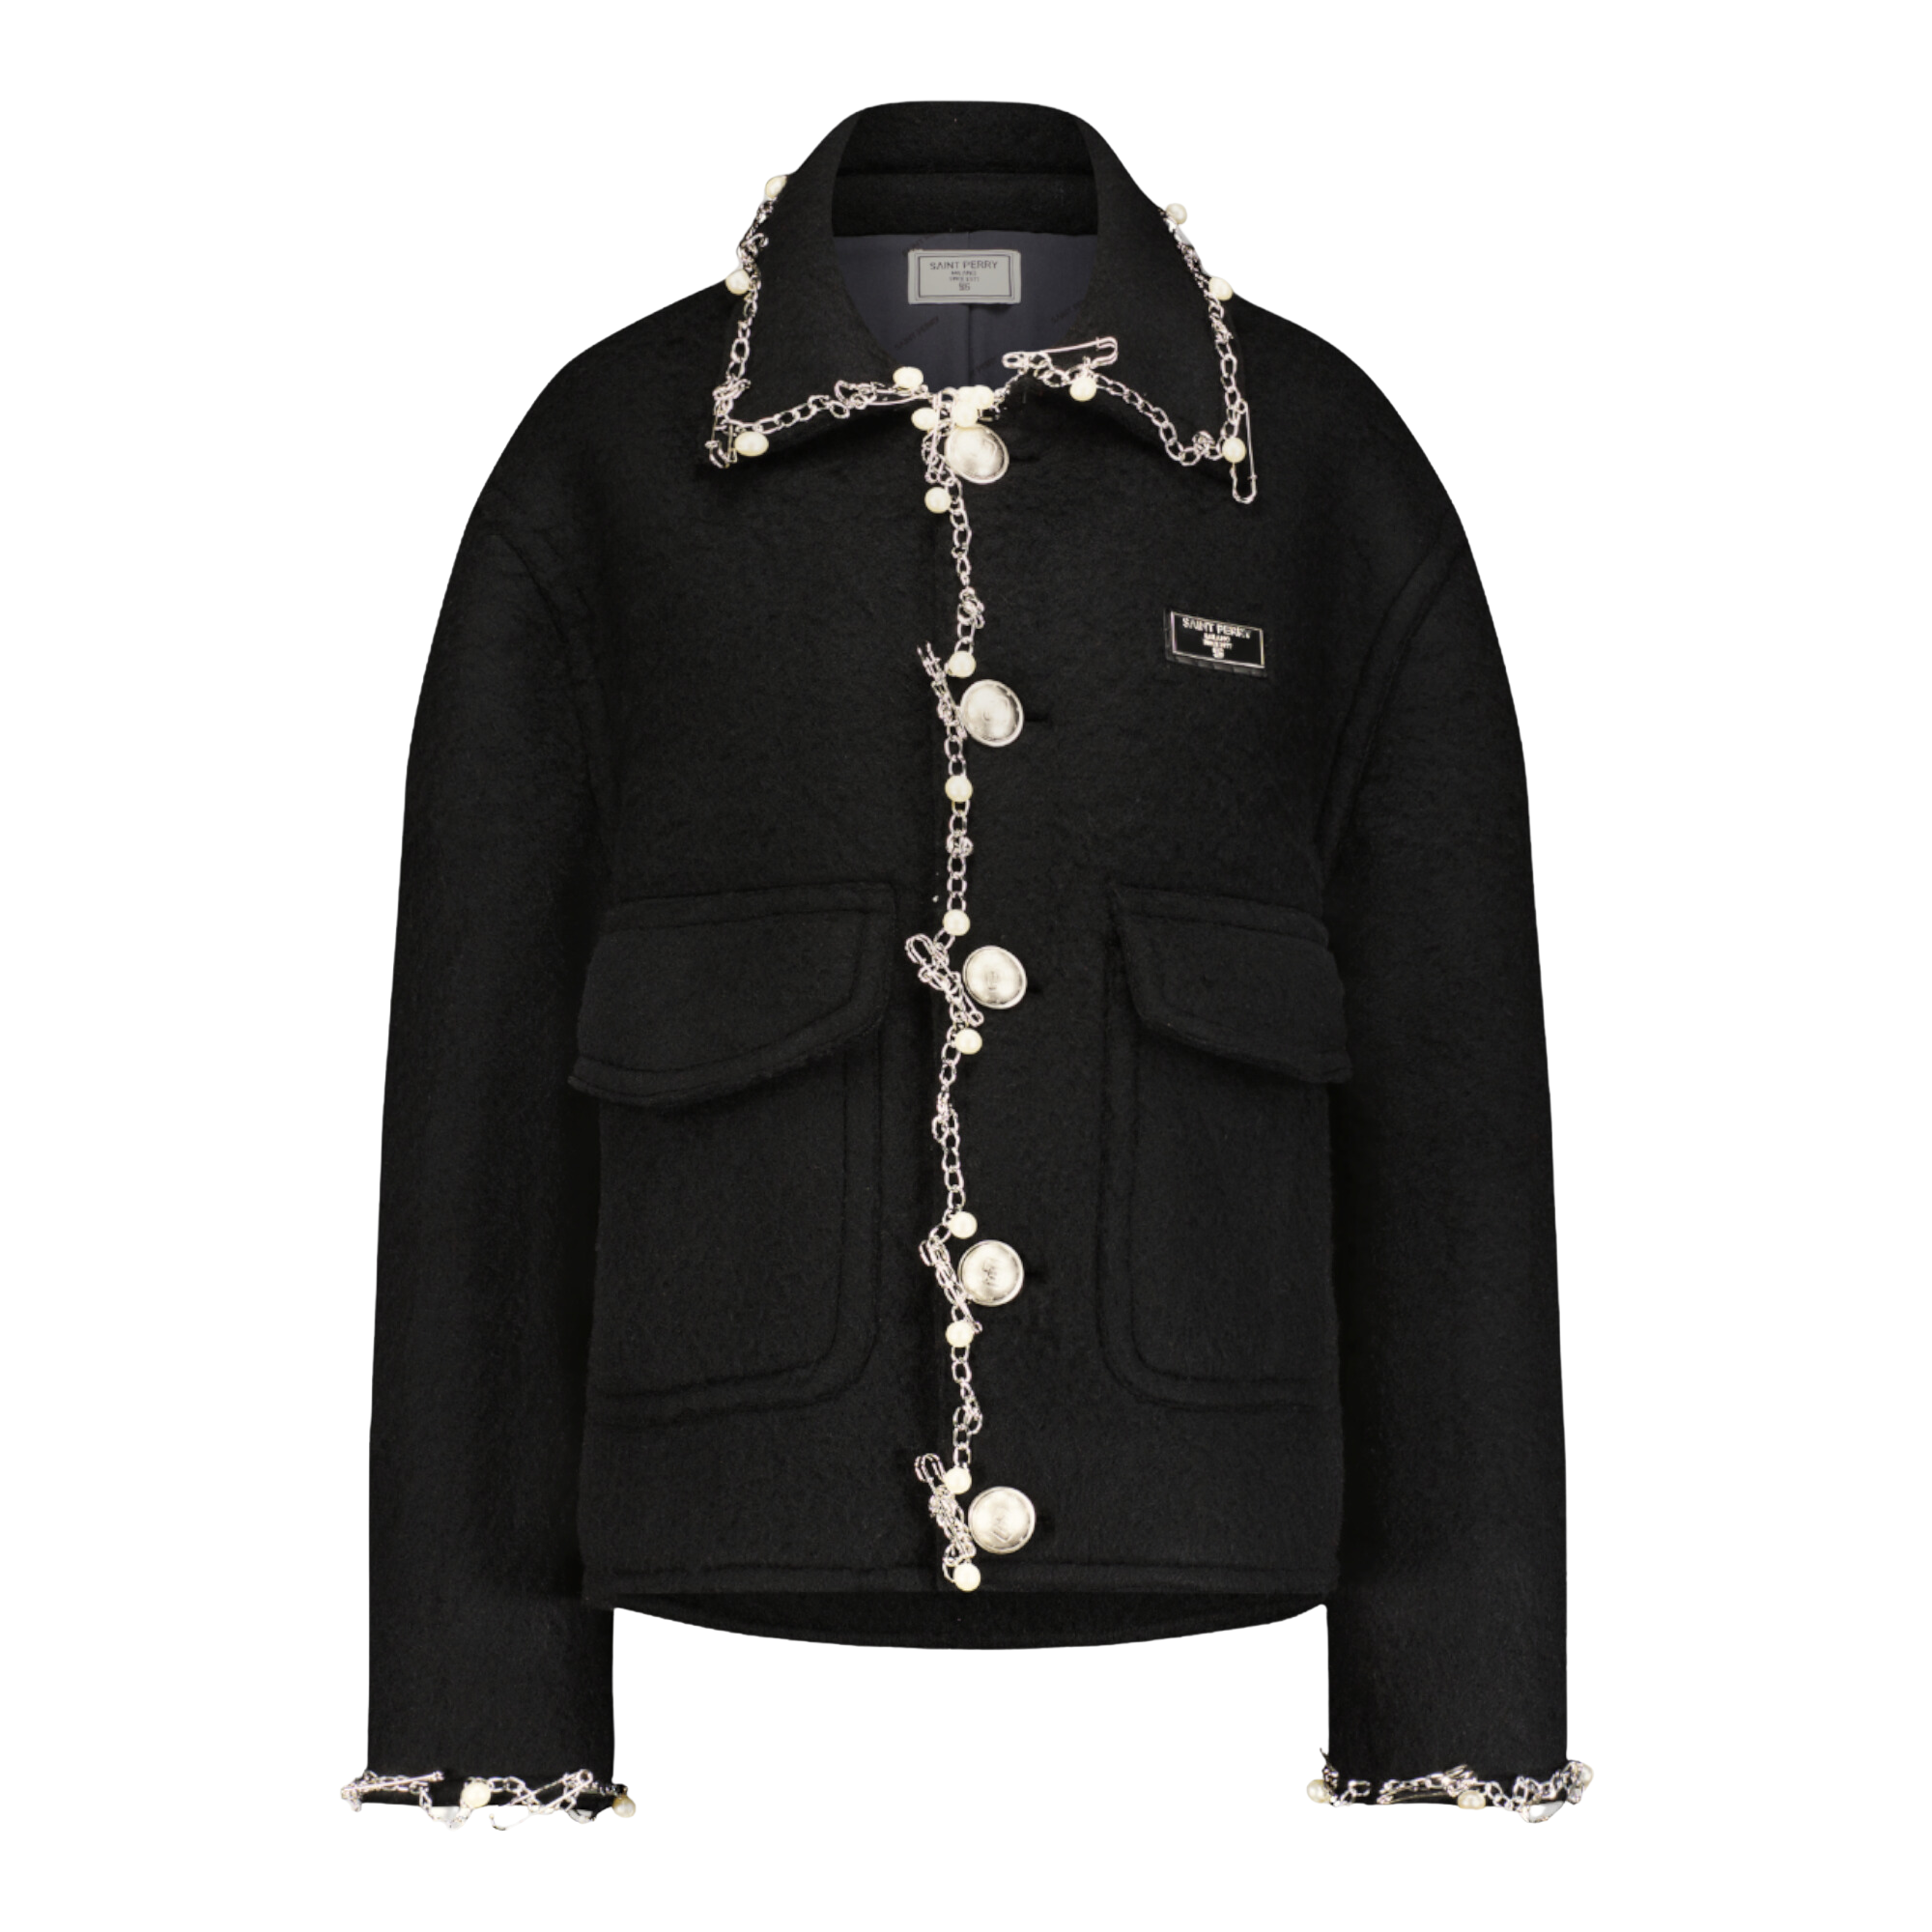 Stud and pearls embellished Jacket